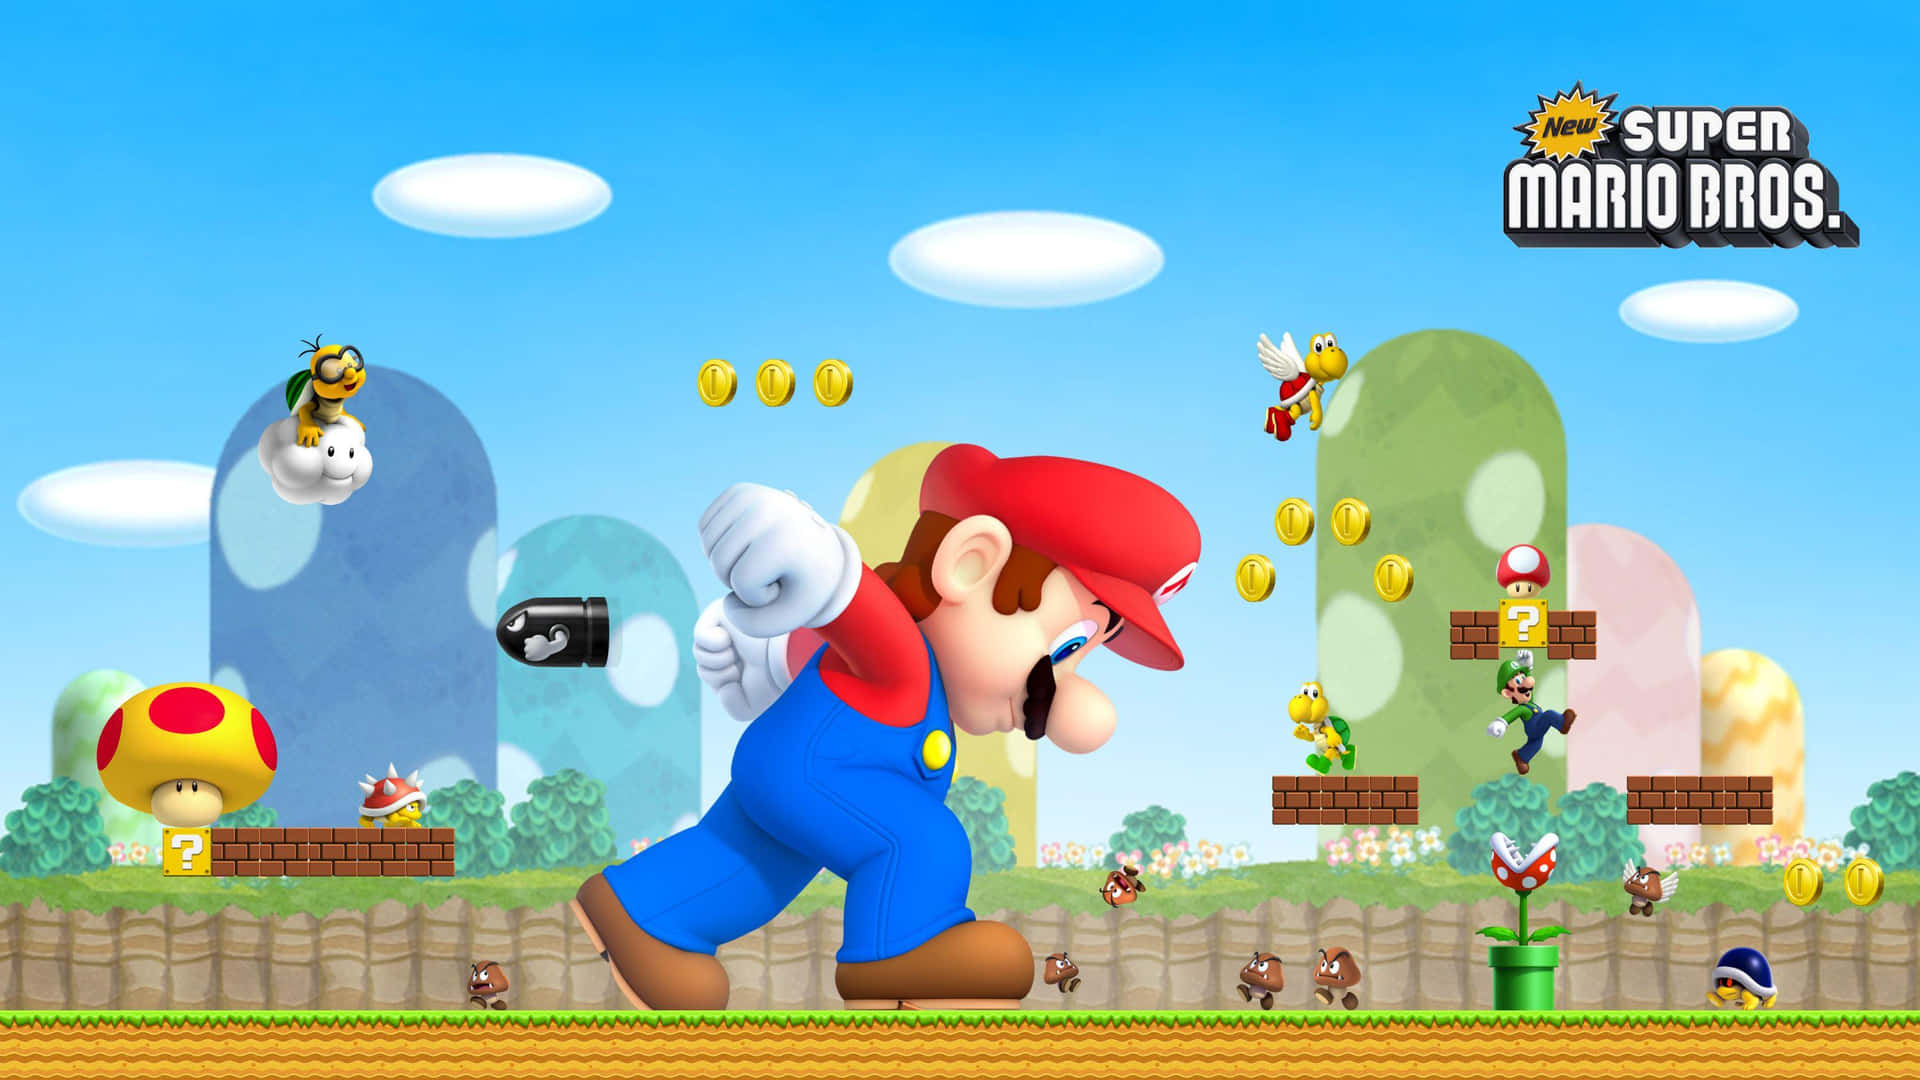 Dynamic Action in Super Mario Bros 2 Wallpaper